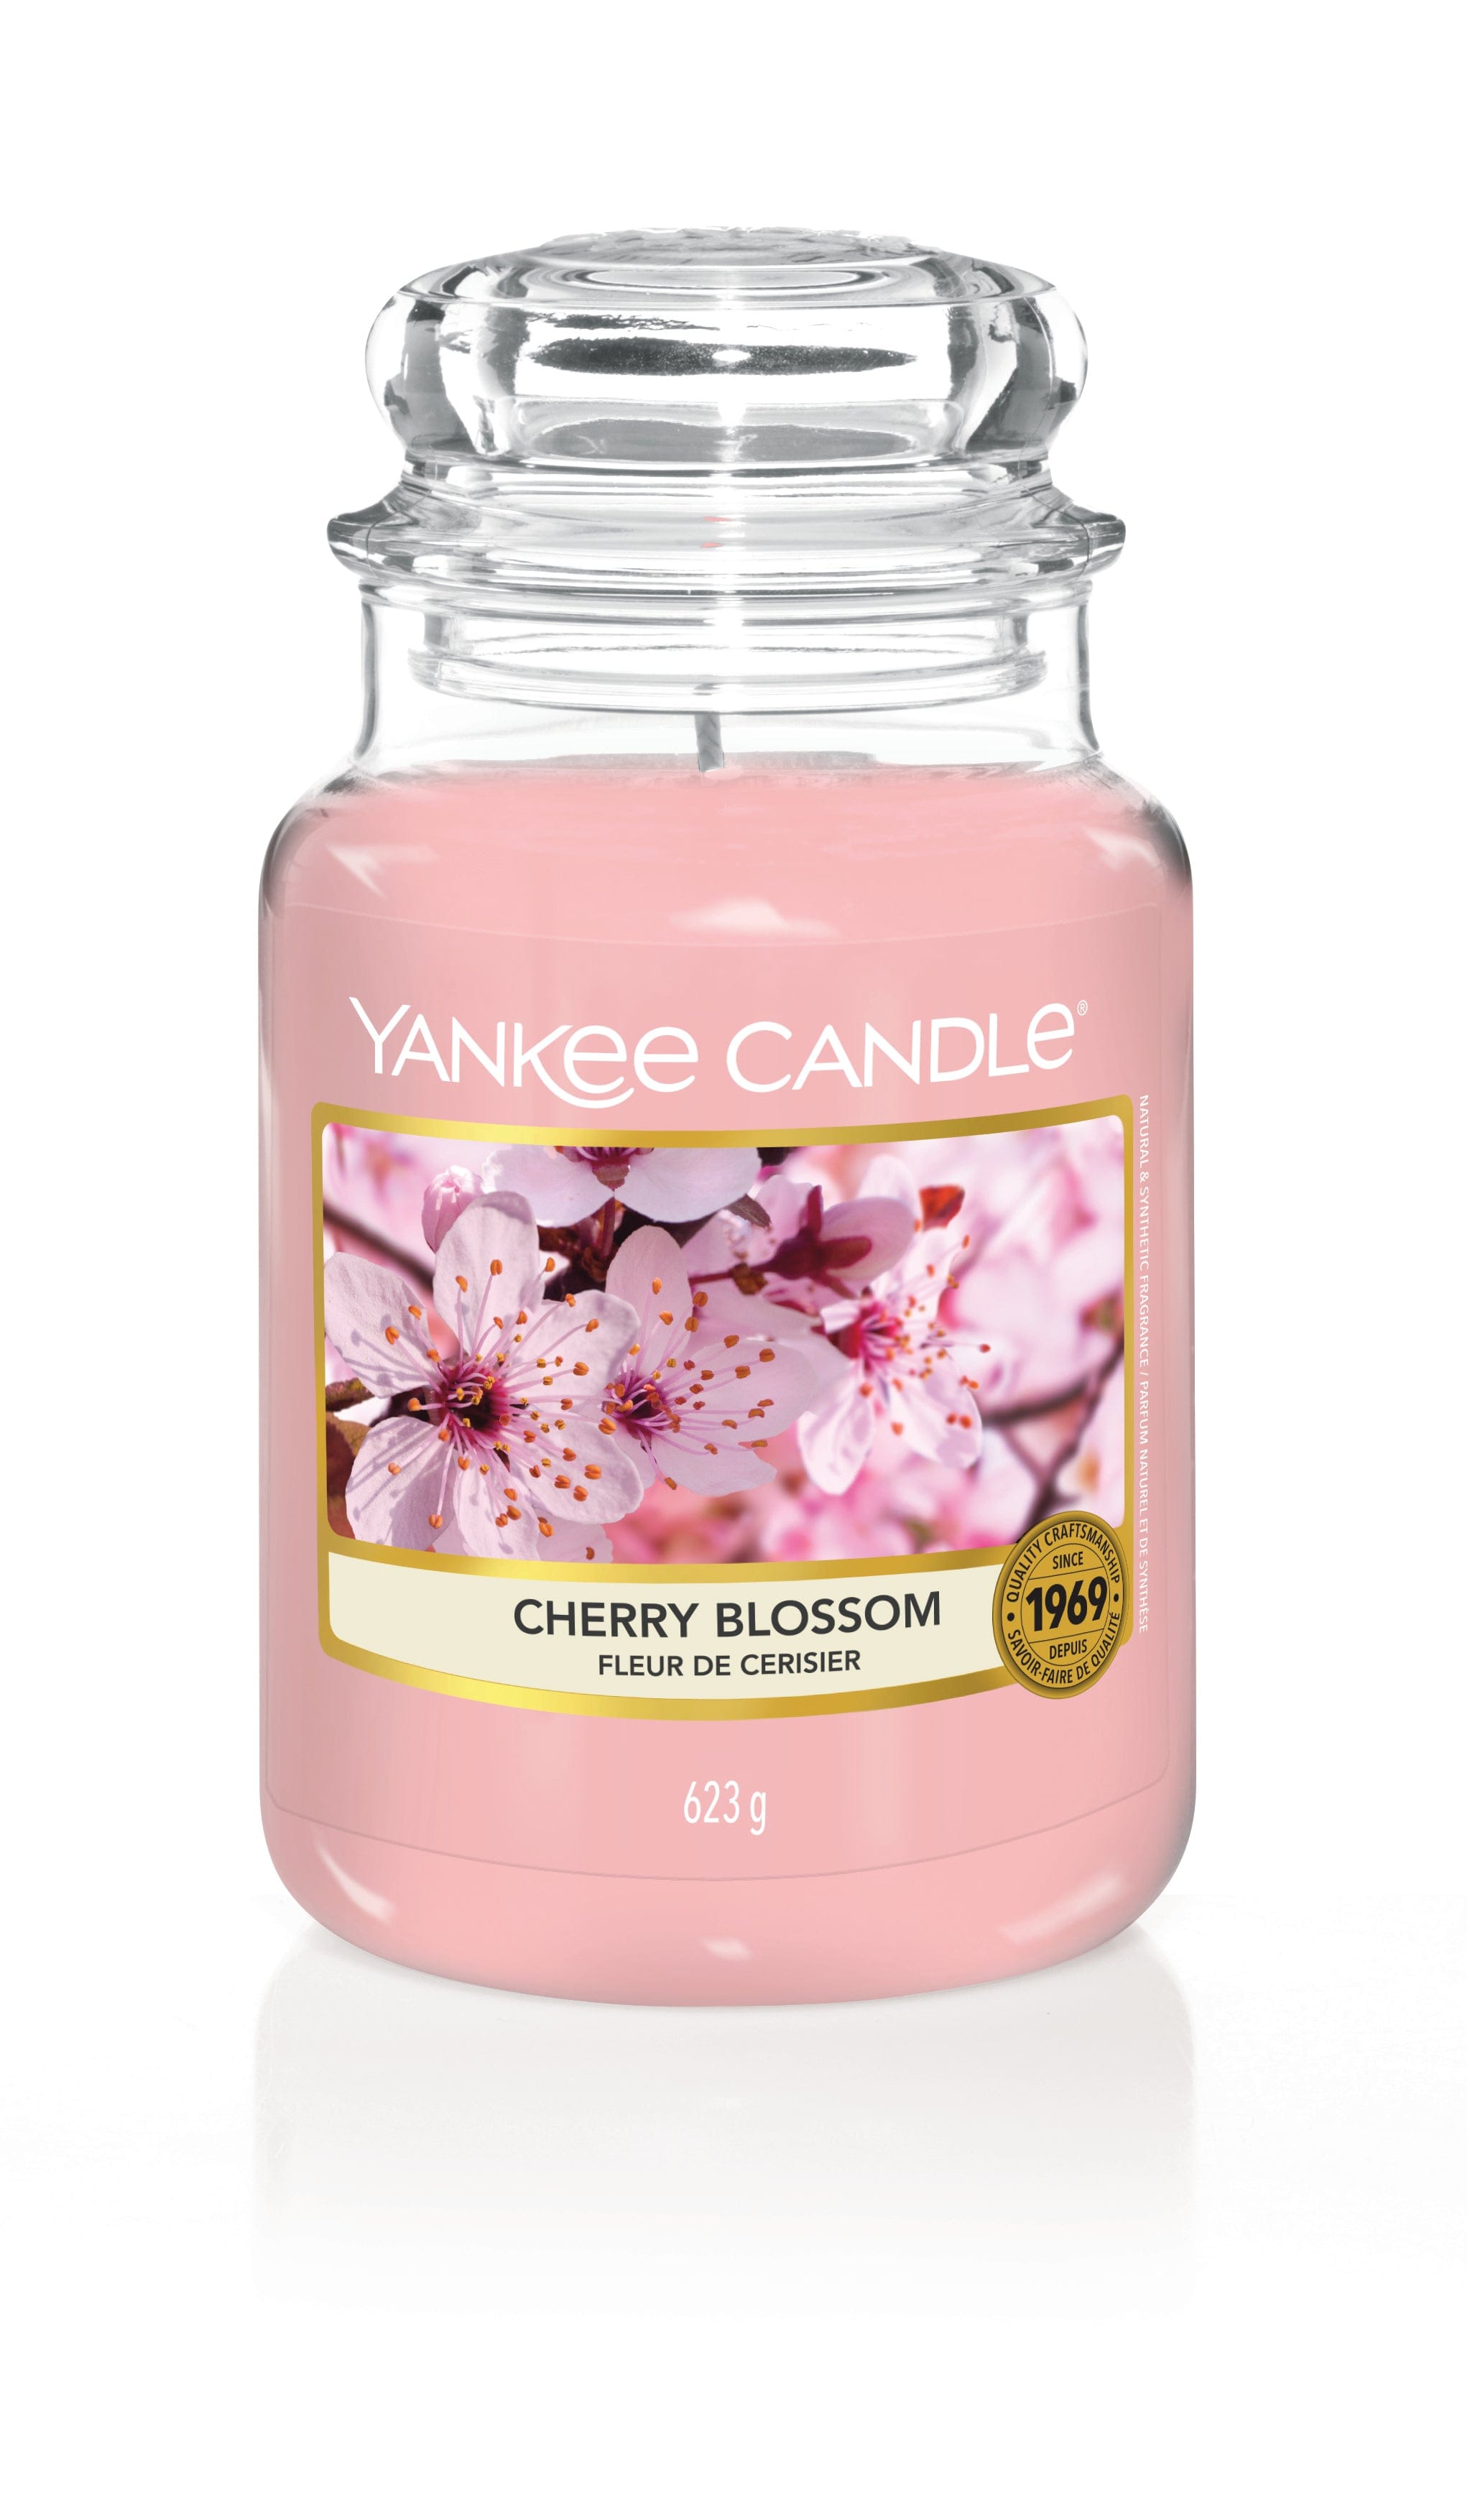 Yankee Candle Large Jar Candle Yankee Candle Large Jar - Cherry Blossom